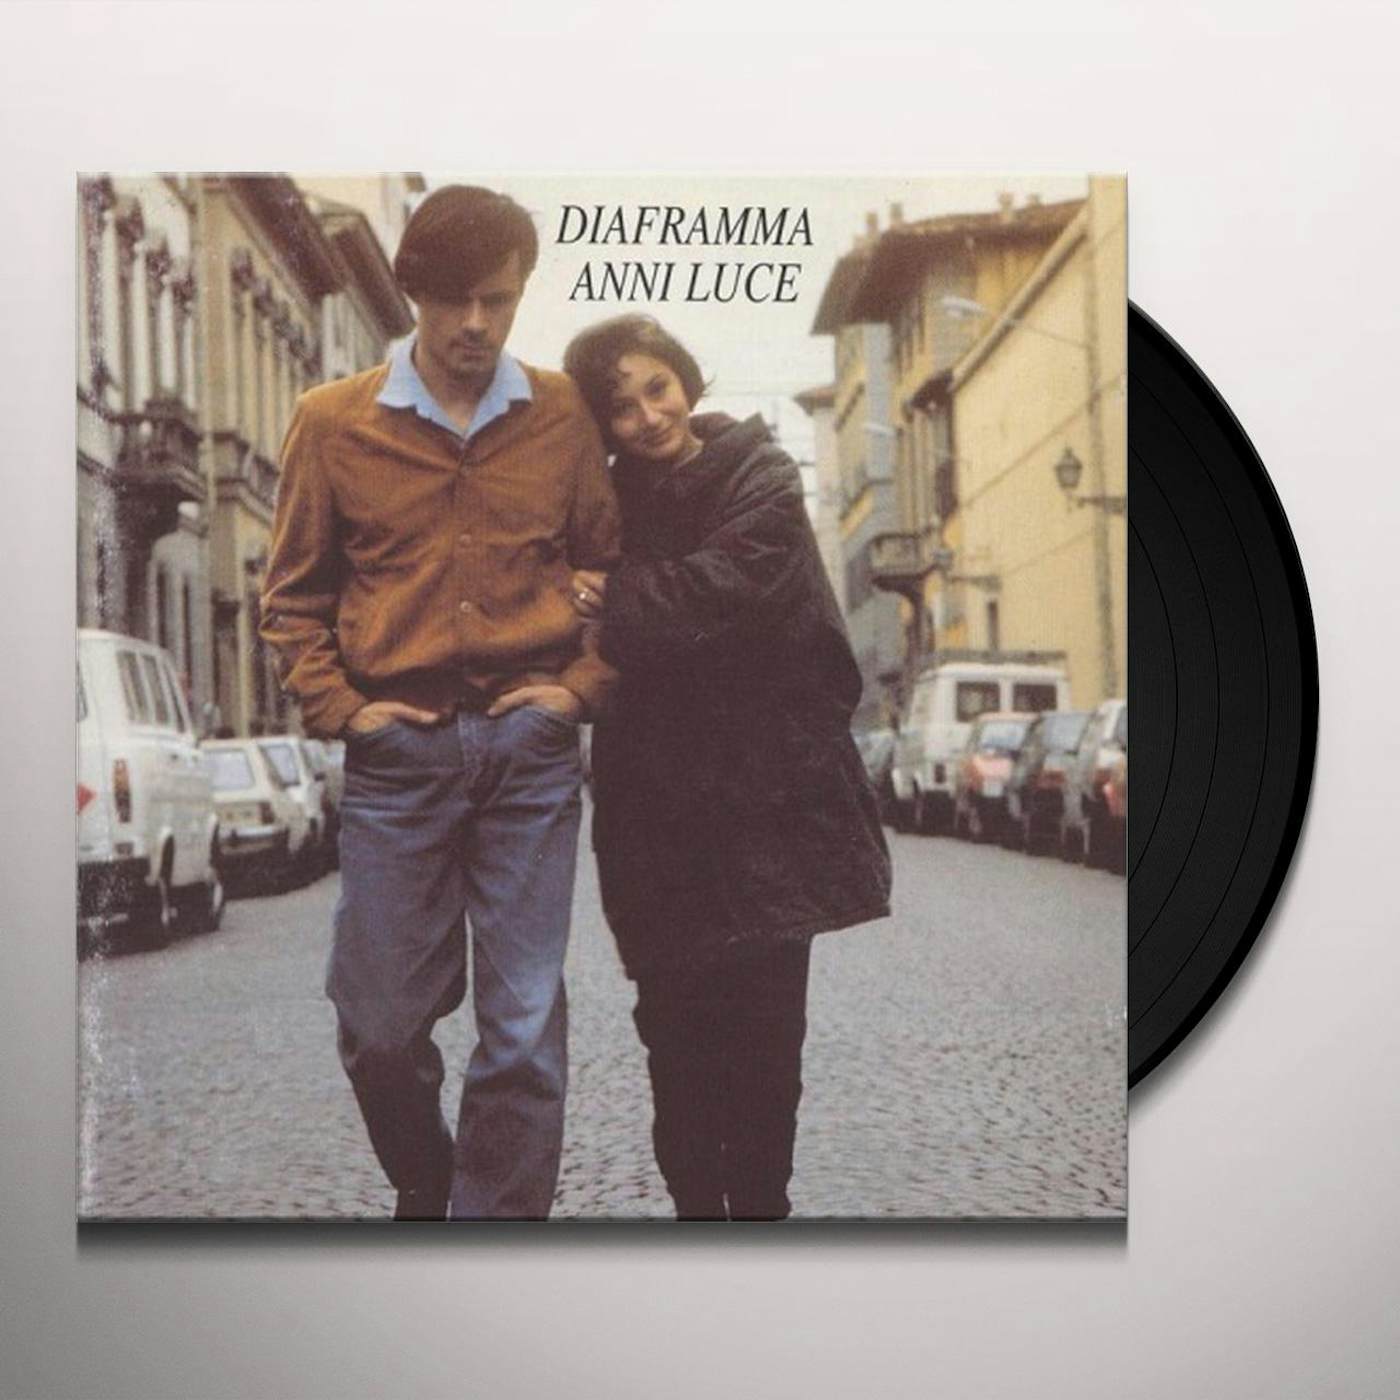 Diaframma Anni luce Vinyl Record